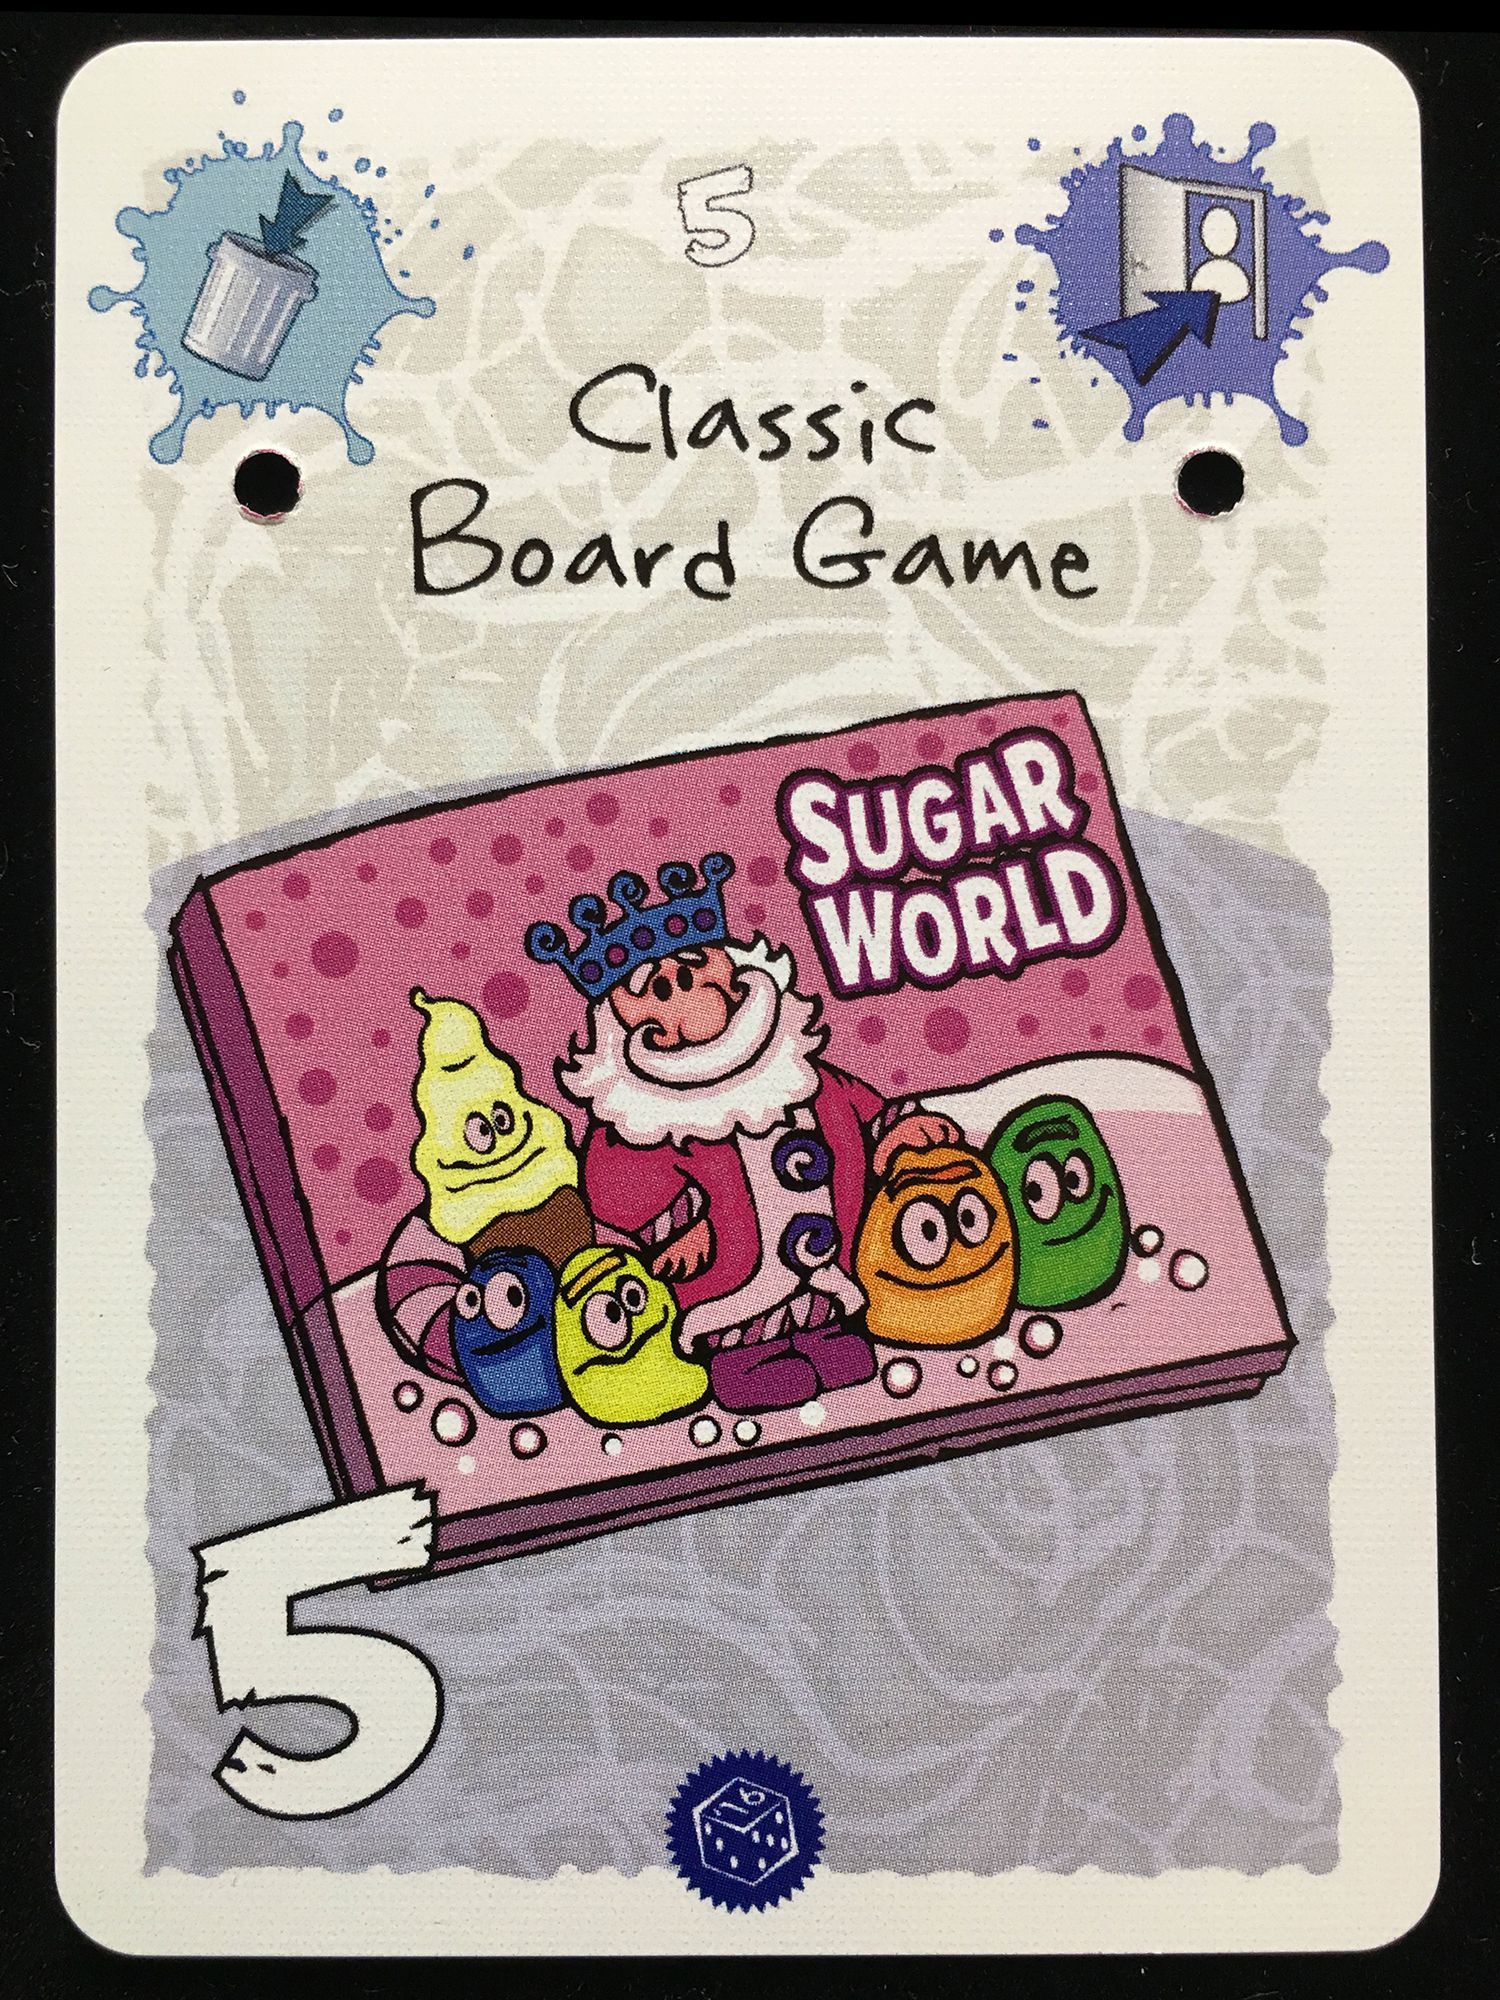 Garbage Day: Classic Board Game "Sugar World"